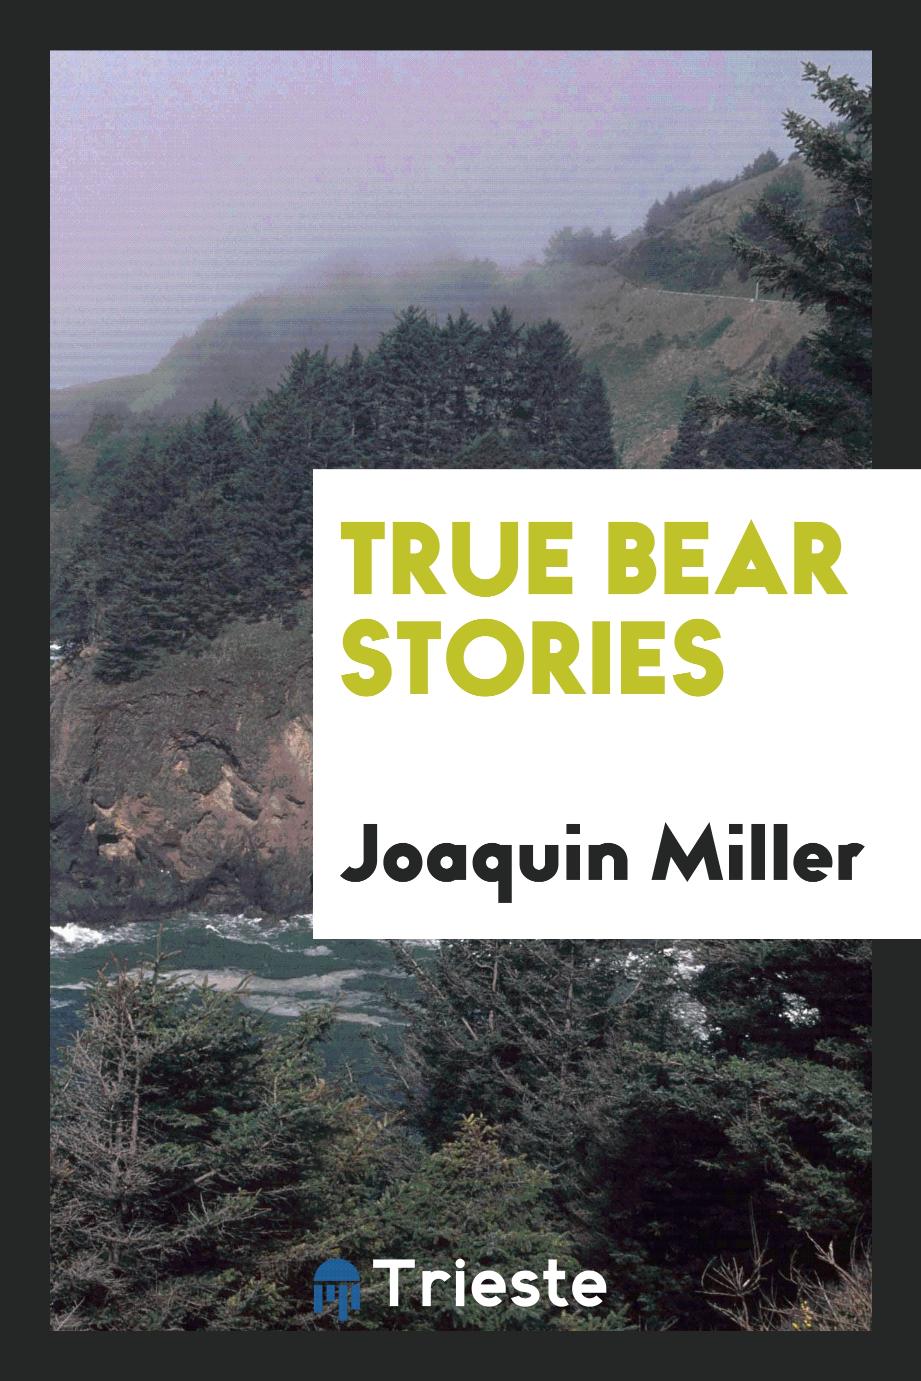 True bear stories